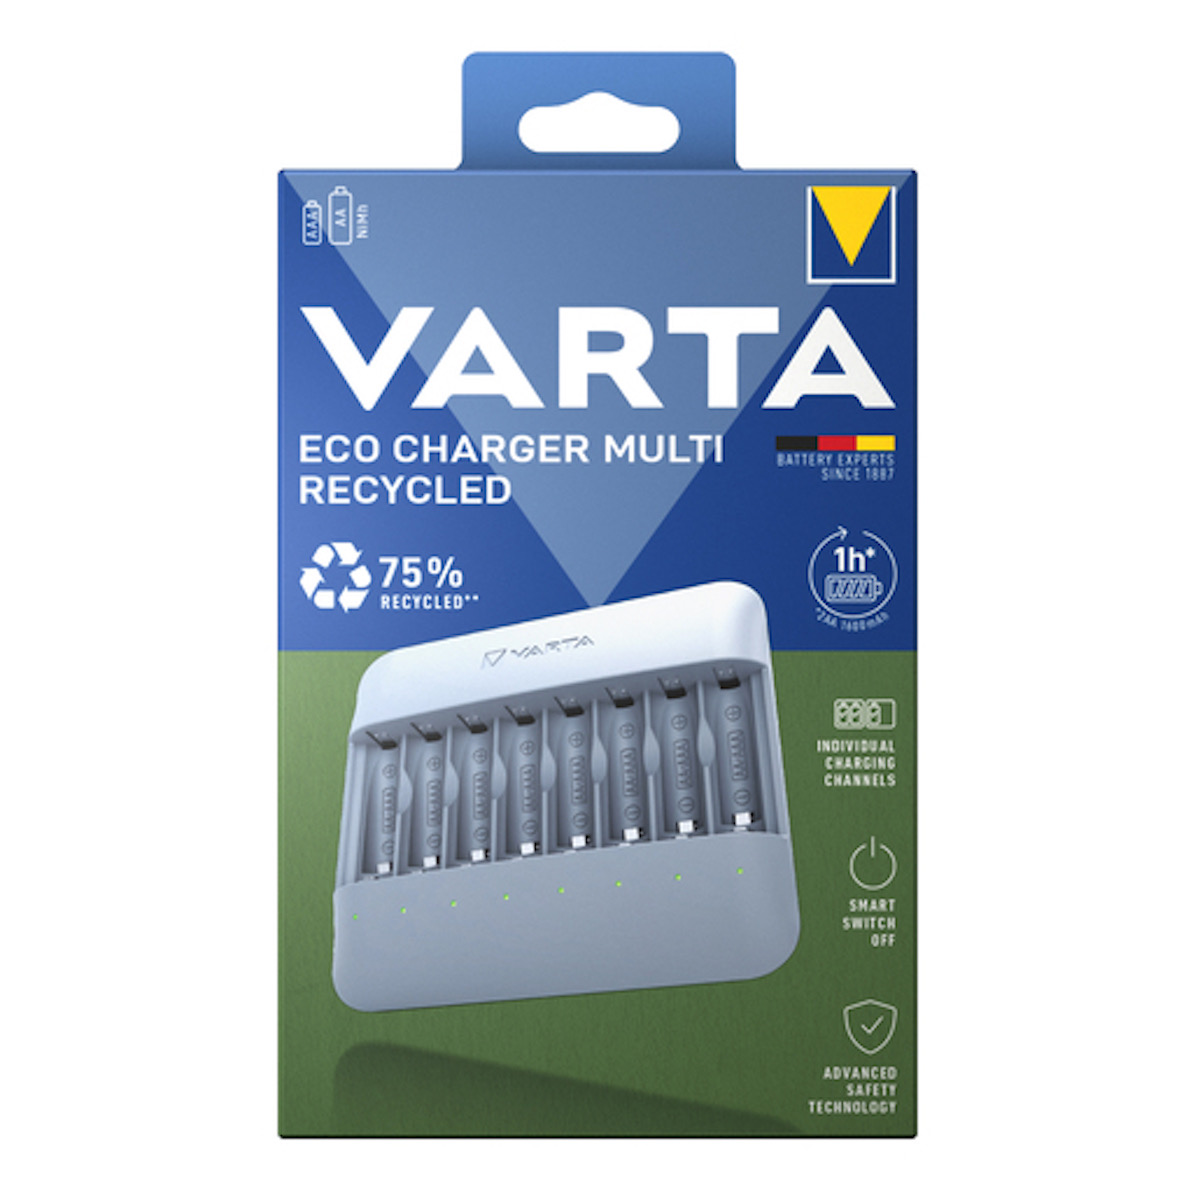 Varta Eco Charger Multi Recycled Ladegerät